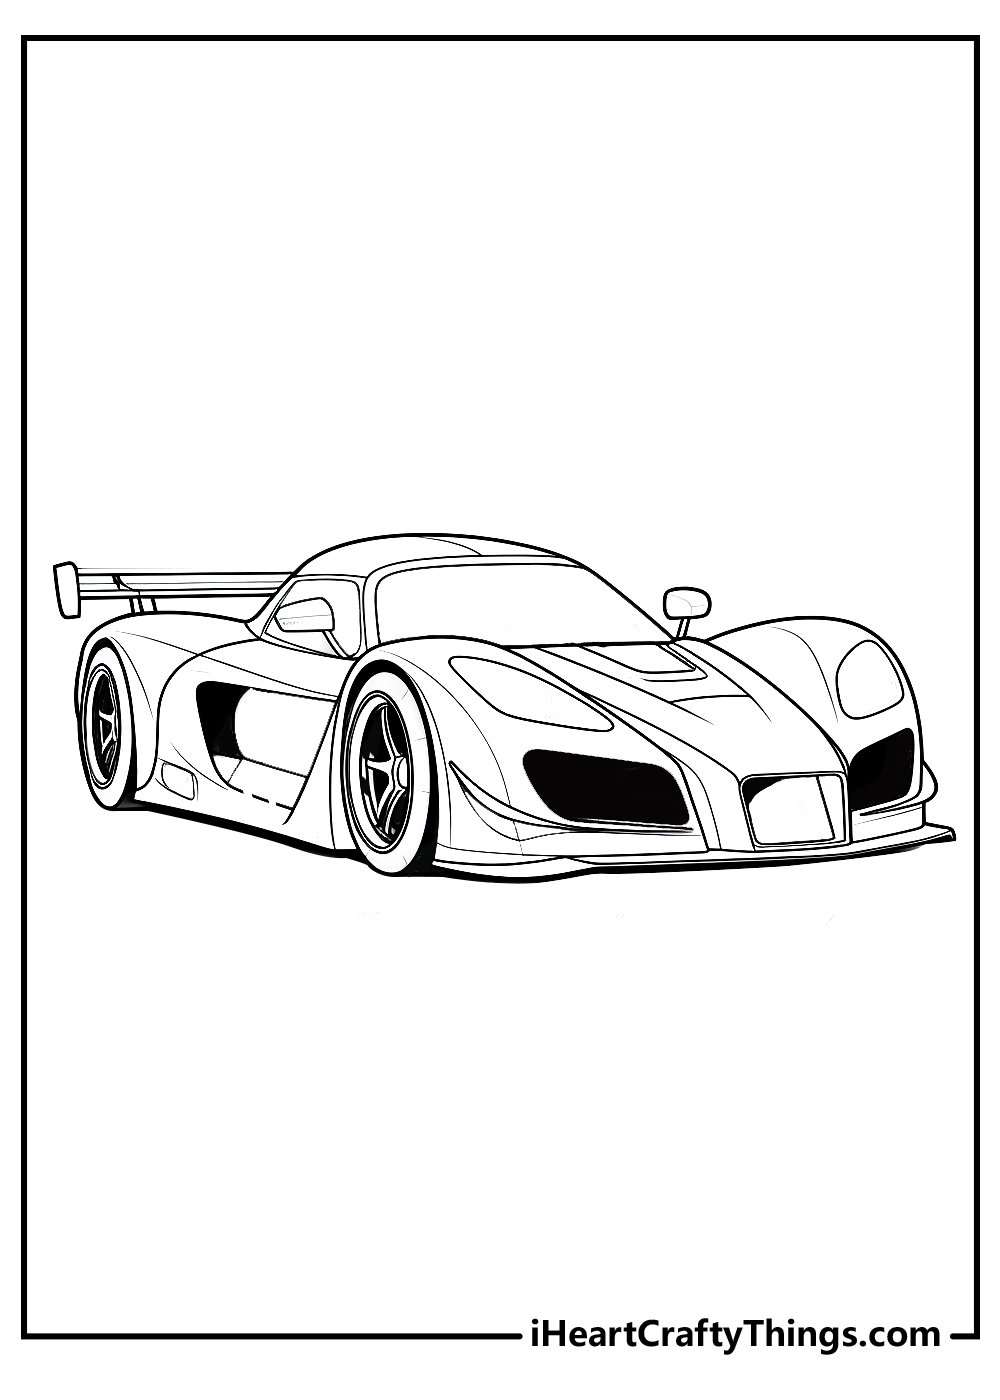 race car coloring sheet free download